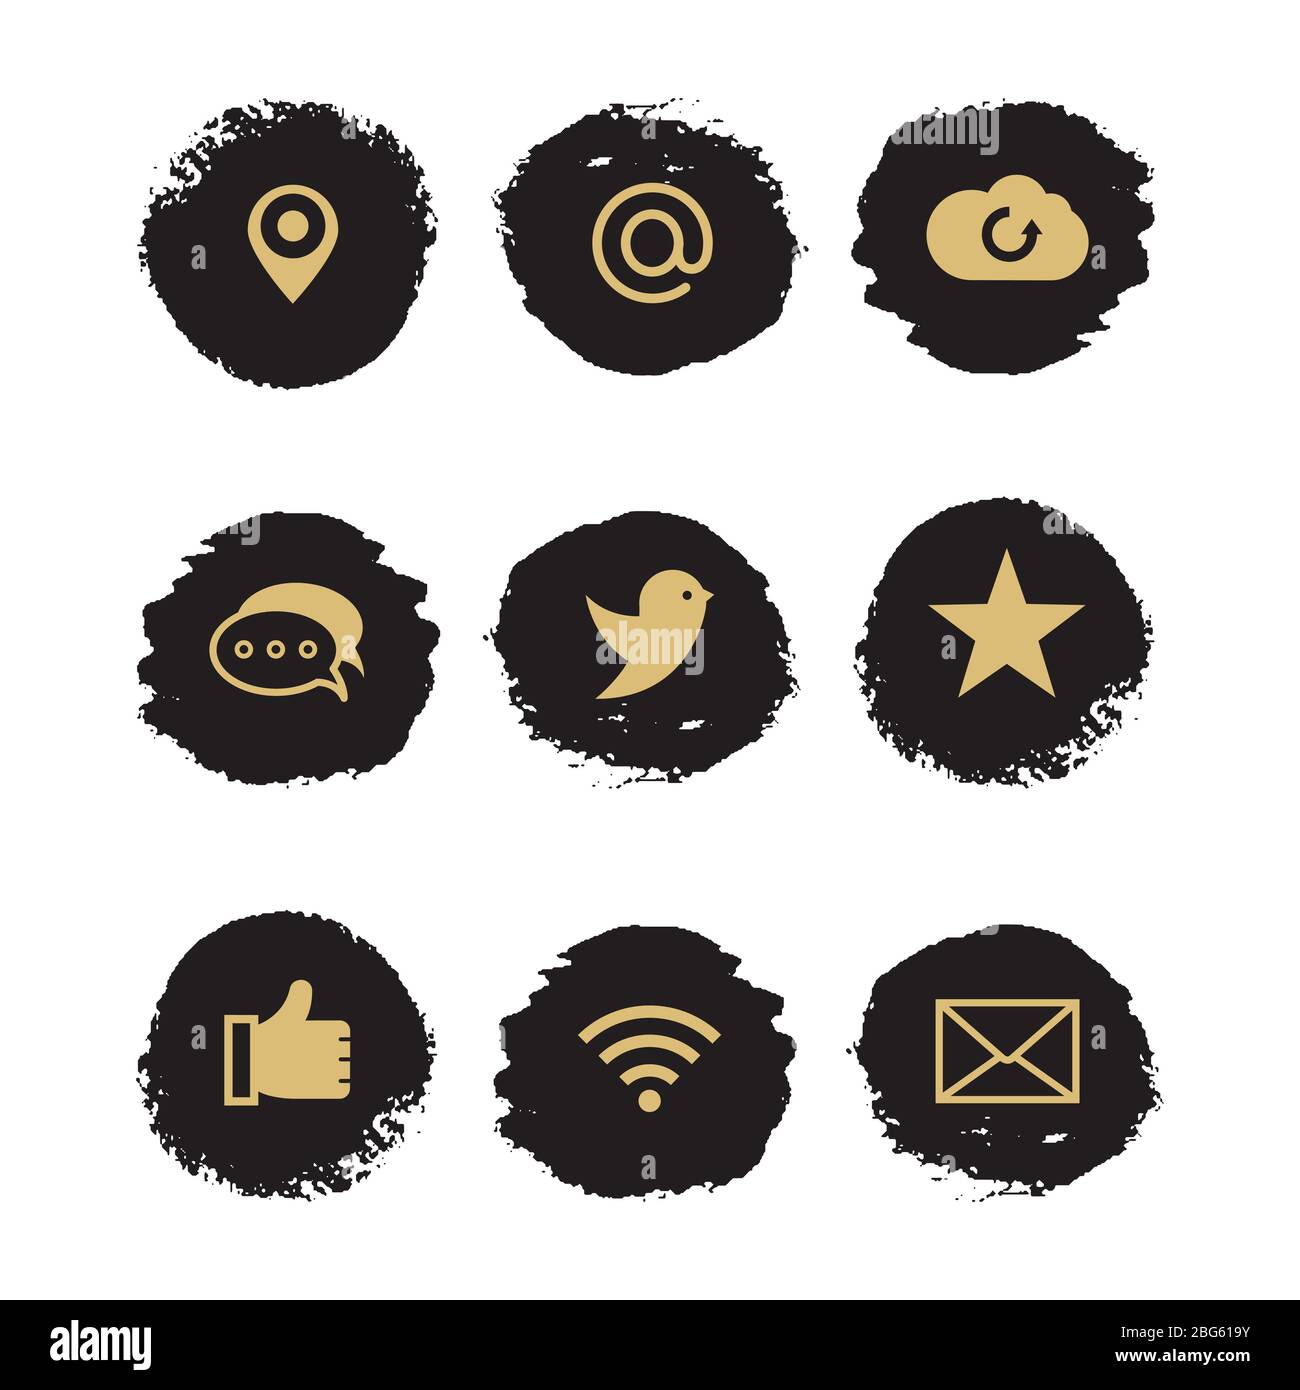 Social Media und Netzwerk Grunge Symbole mit schwarzem Punkt. Vektorgrafik Stock Vektor